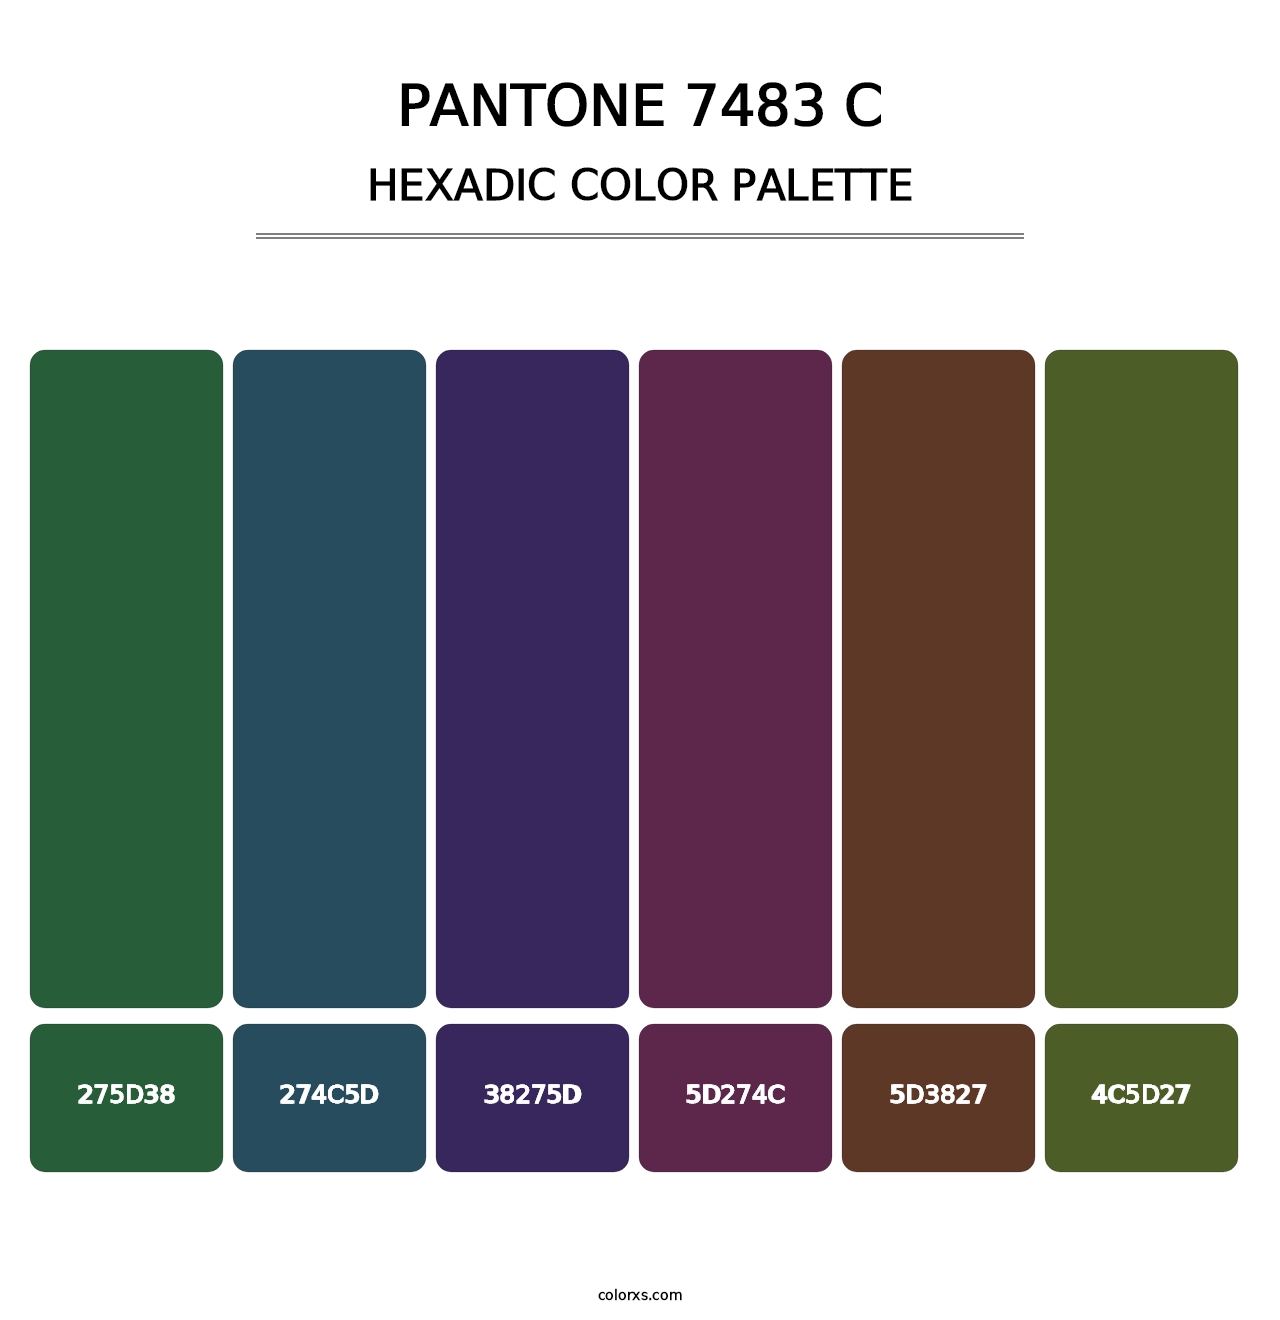 PANTONE 7483 C - Hexadic Color Palette